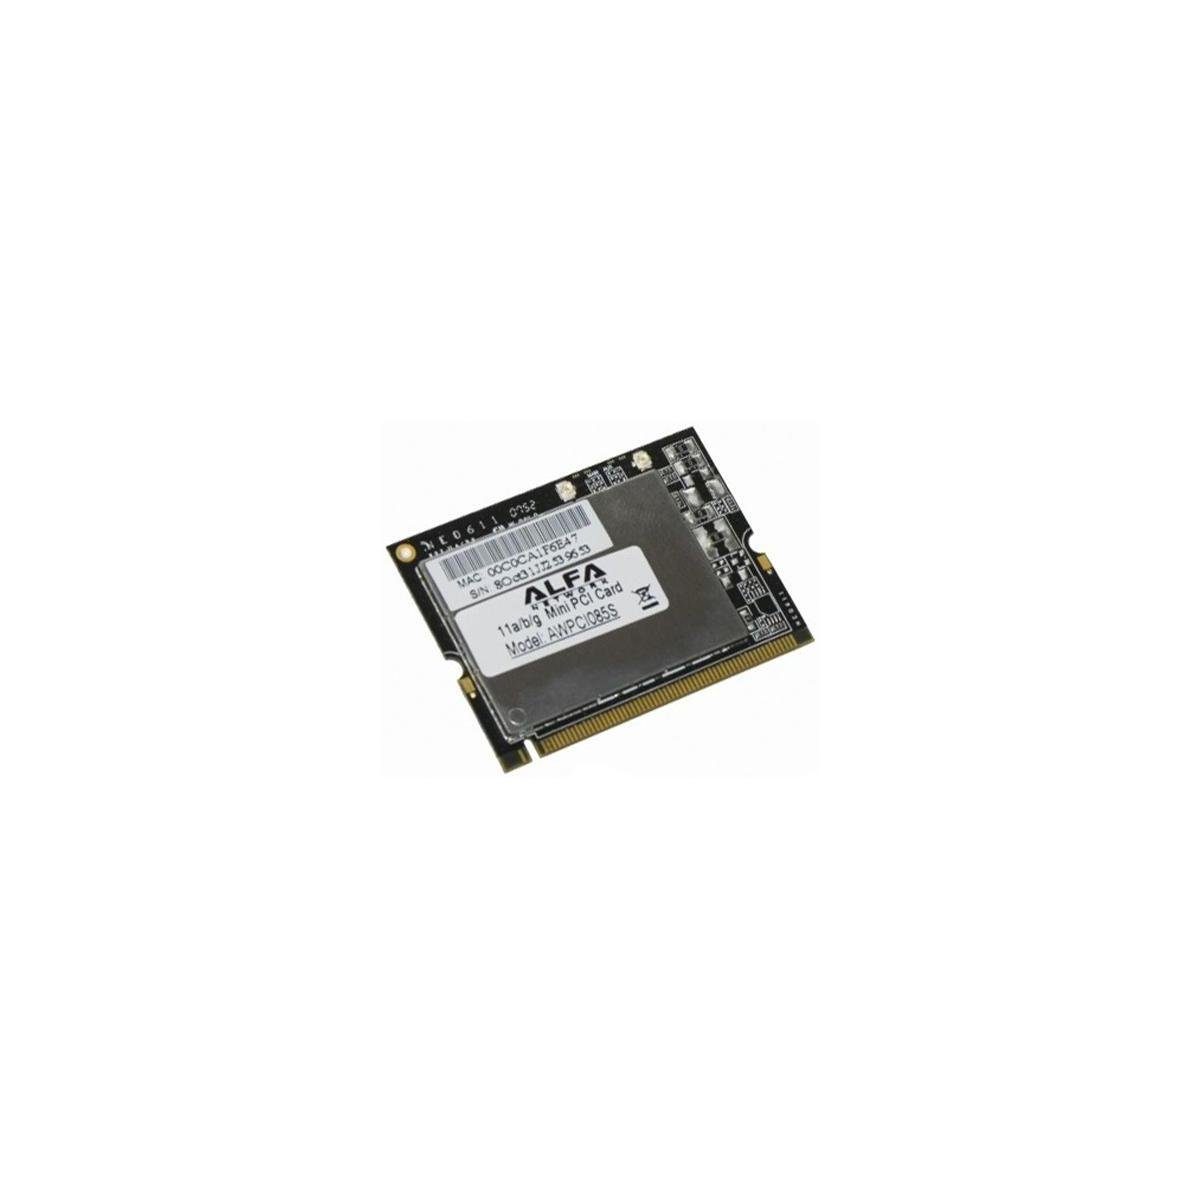 Alfa AWPCI085S - AR5006x a/b/g Mini-PCI-Modul Computer-Adapter